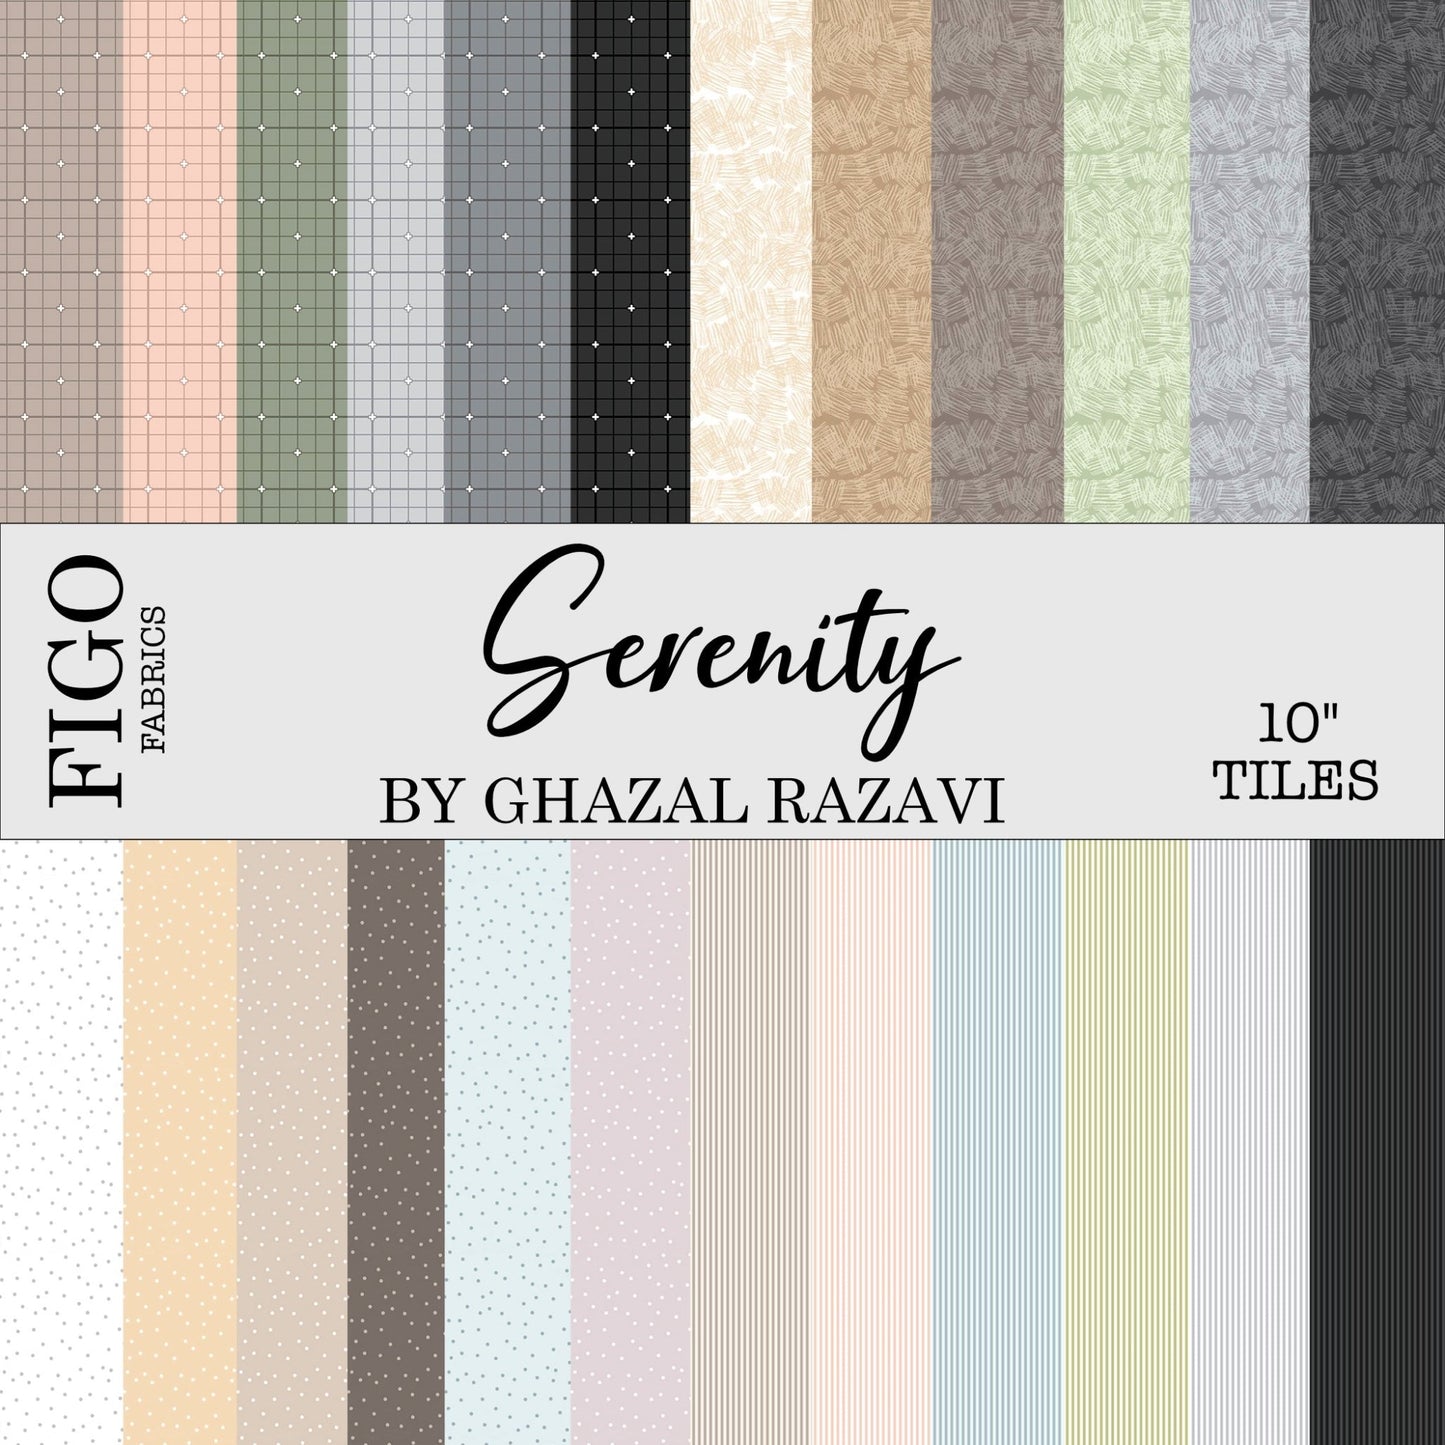 Serenity 10" Tiles Quilt Fabric by Ghazal Razavi - Jammin Threads